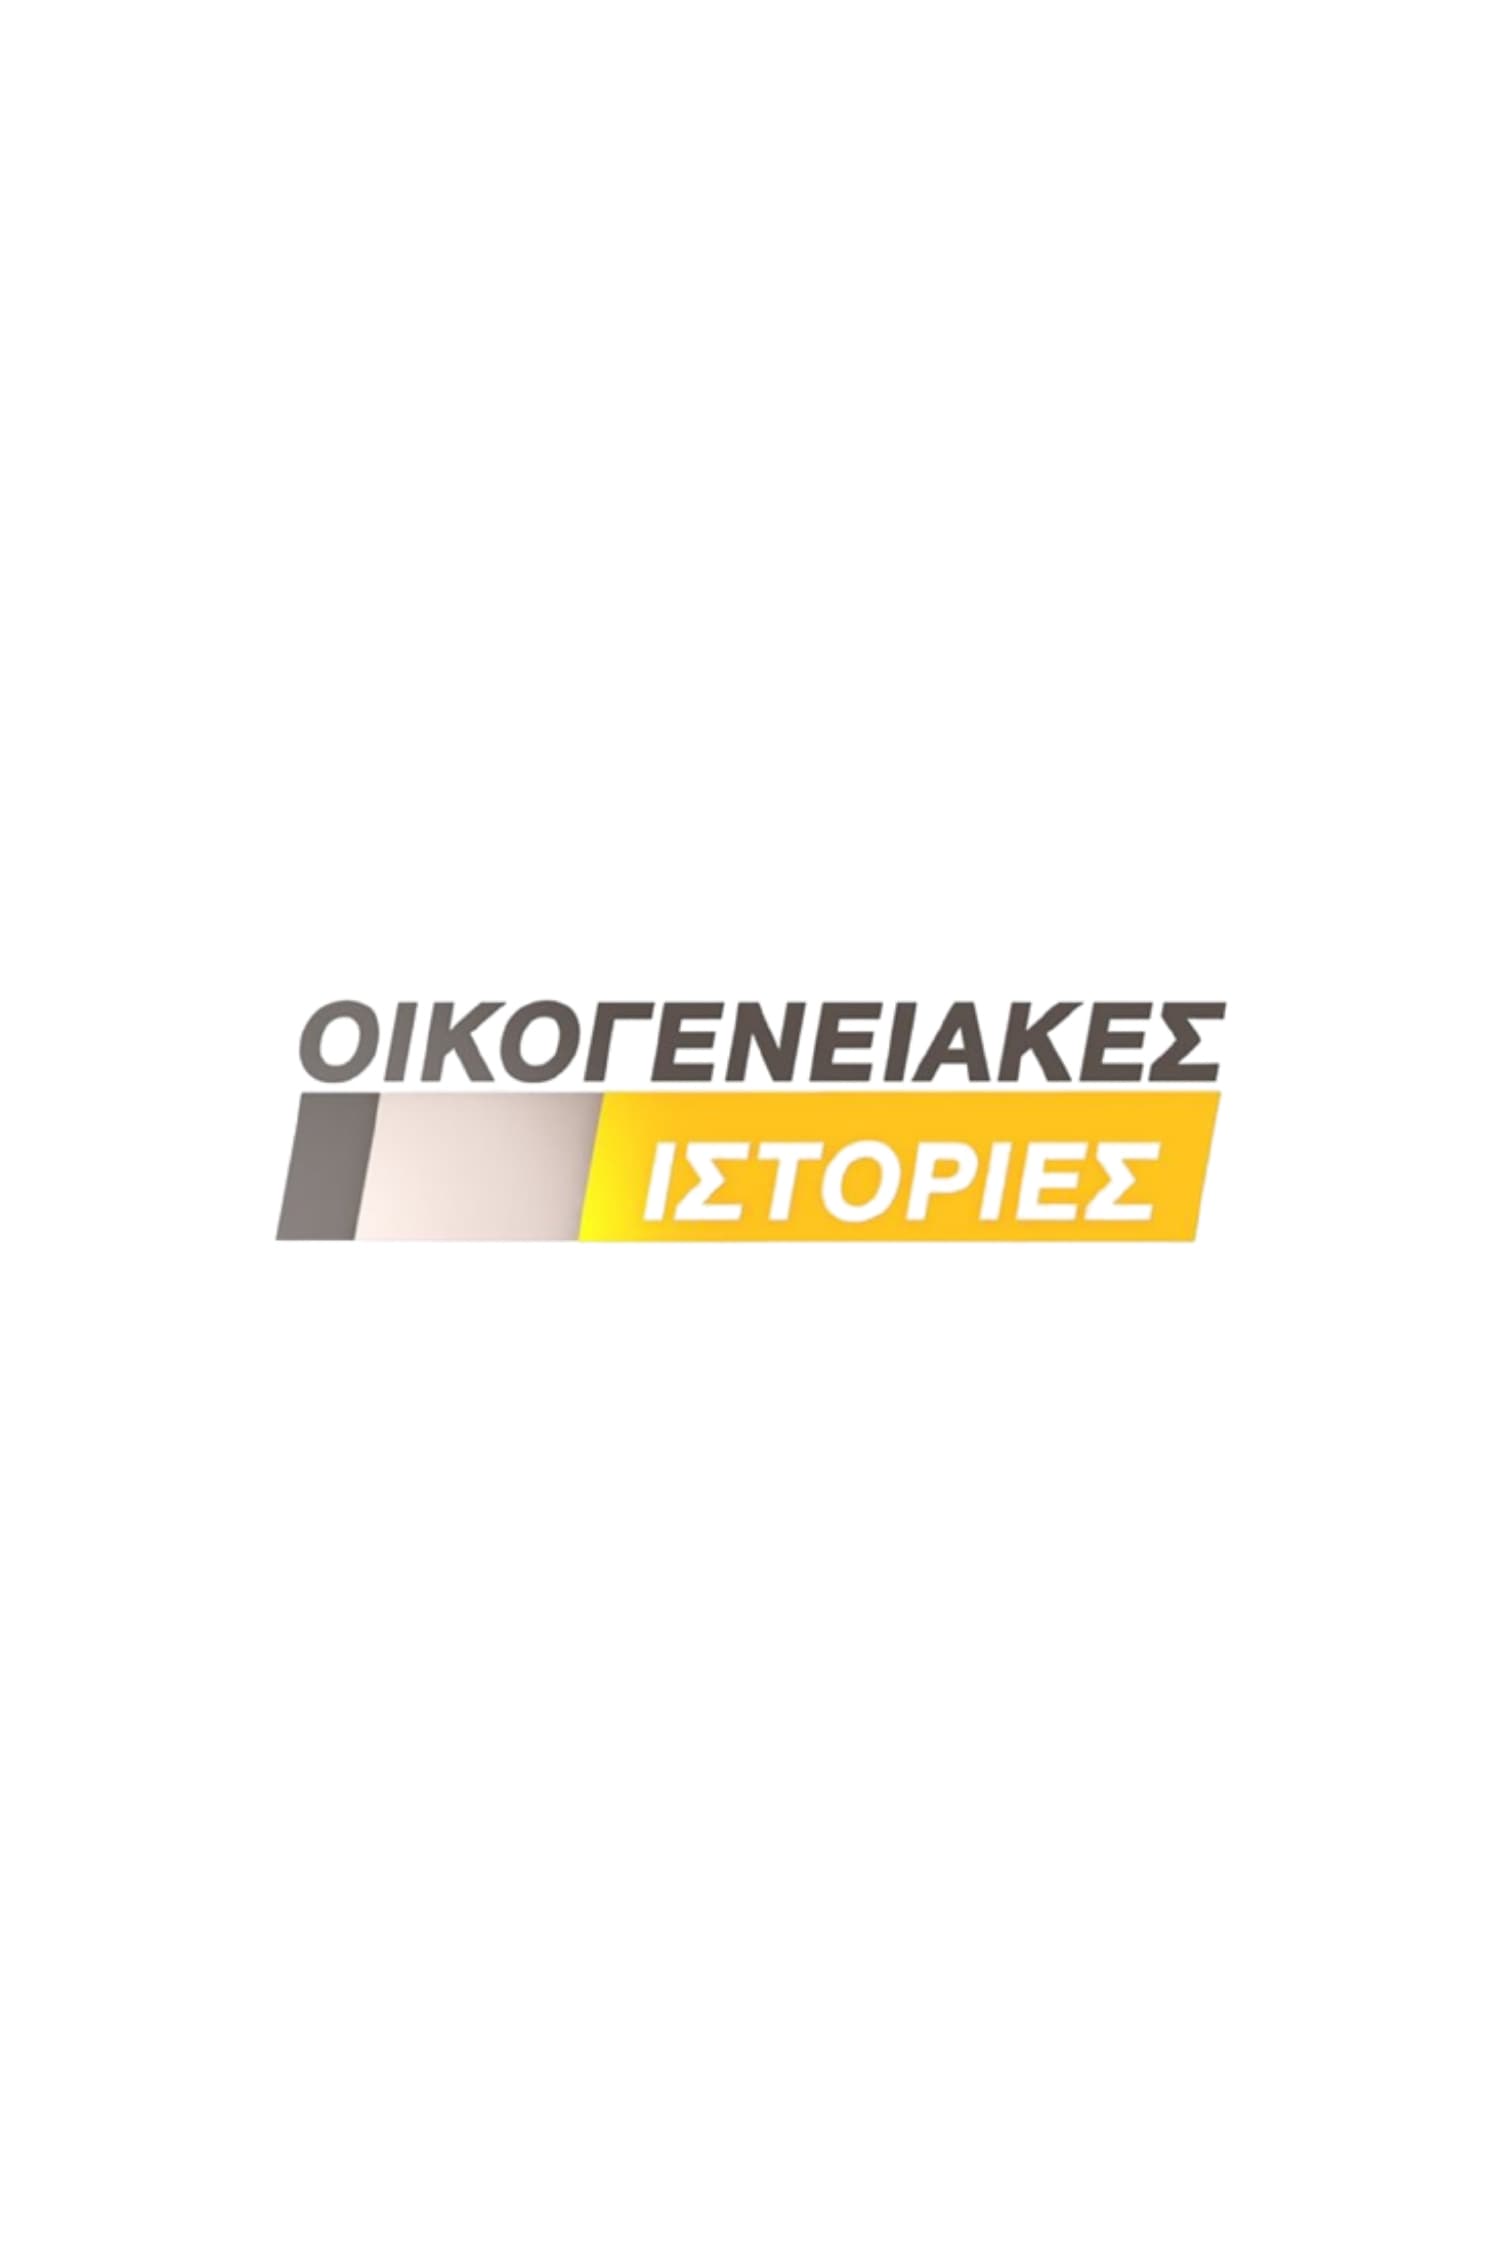 TV ratings for Oikogeneiakes Istories (Οικογενειακες Ιστορίες) in Denmark. Alpha TV TV series